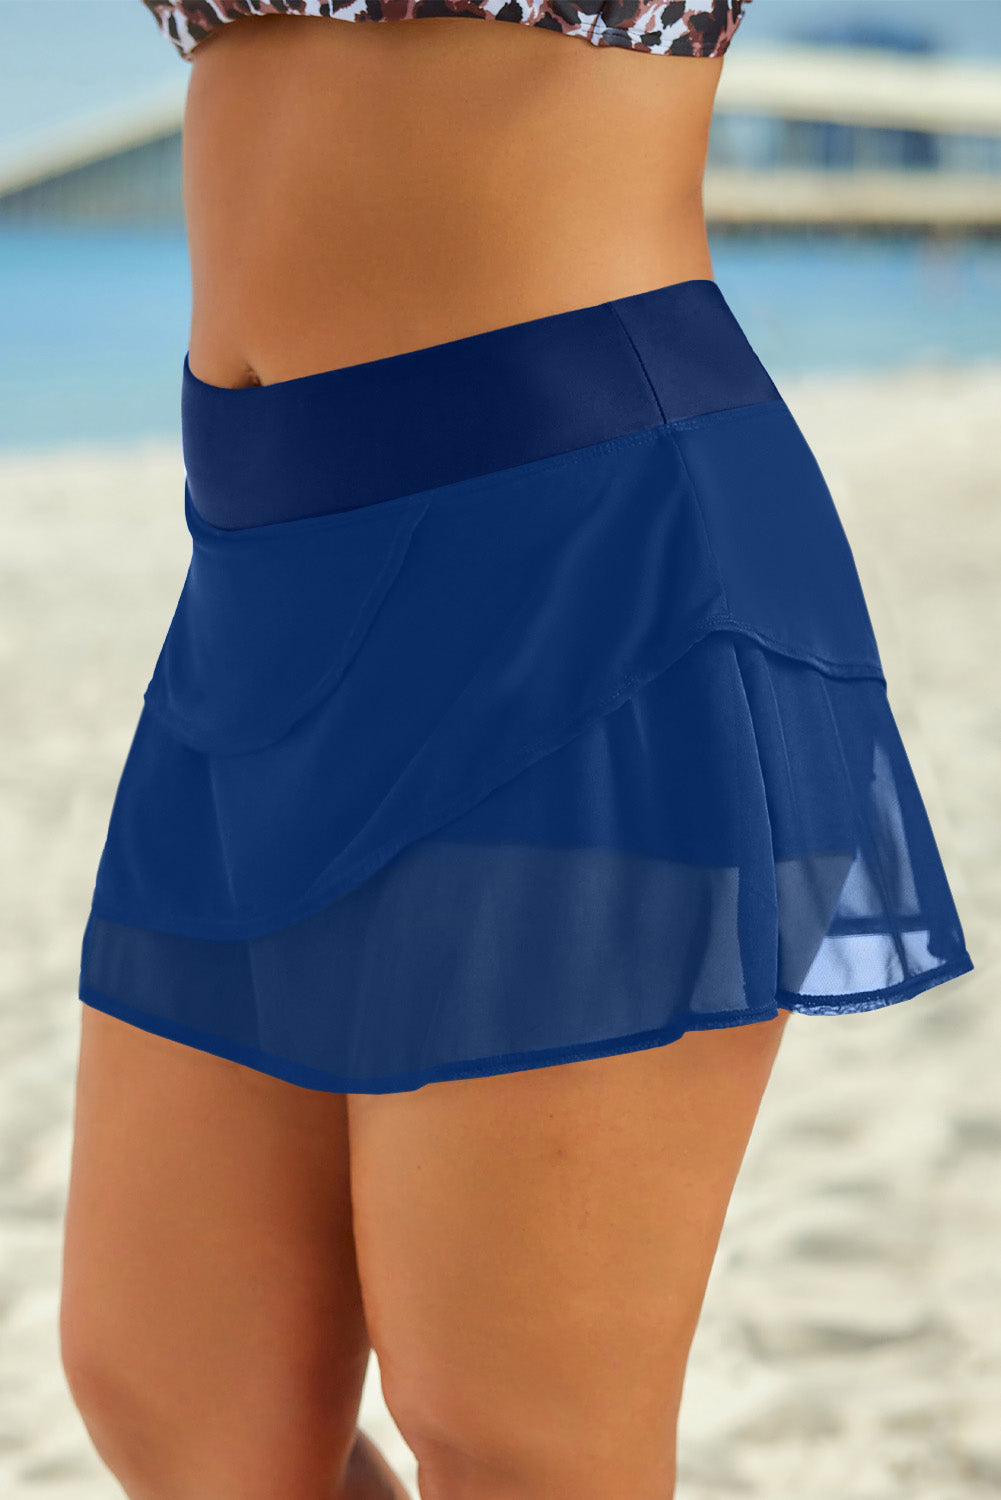 TEEK - Peacock Blue Elastic Waist Swim Skirt SWIMWEAR TEEK Trend   